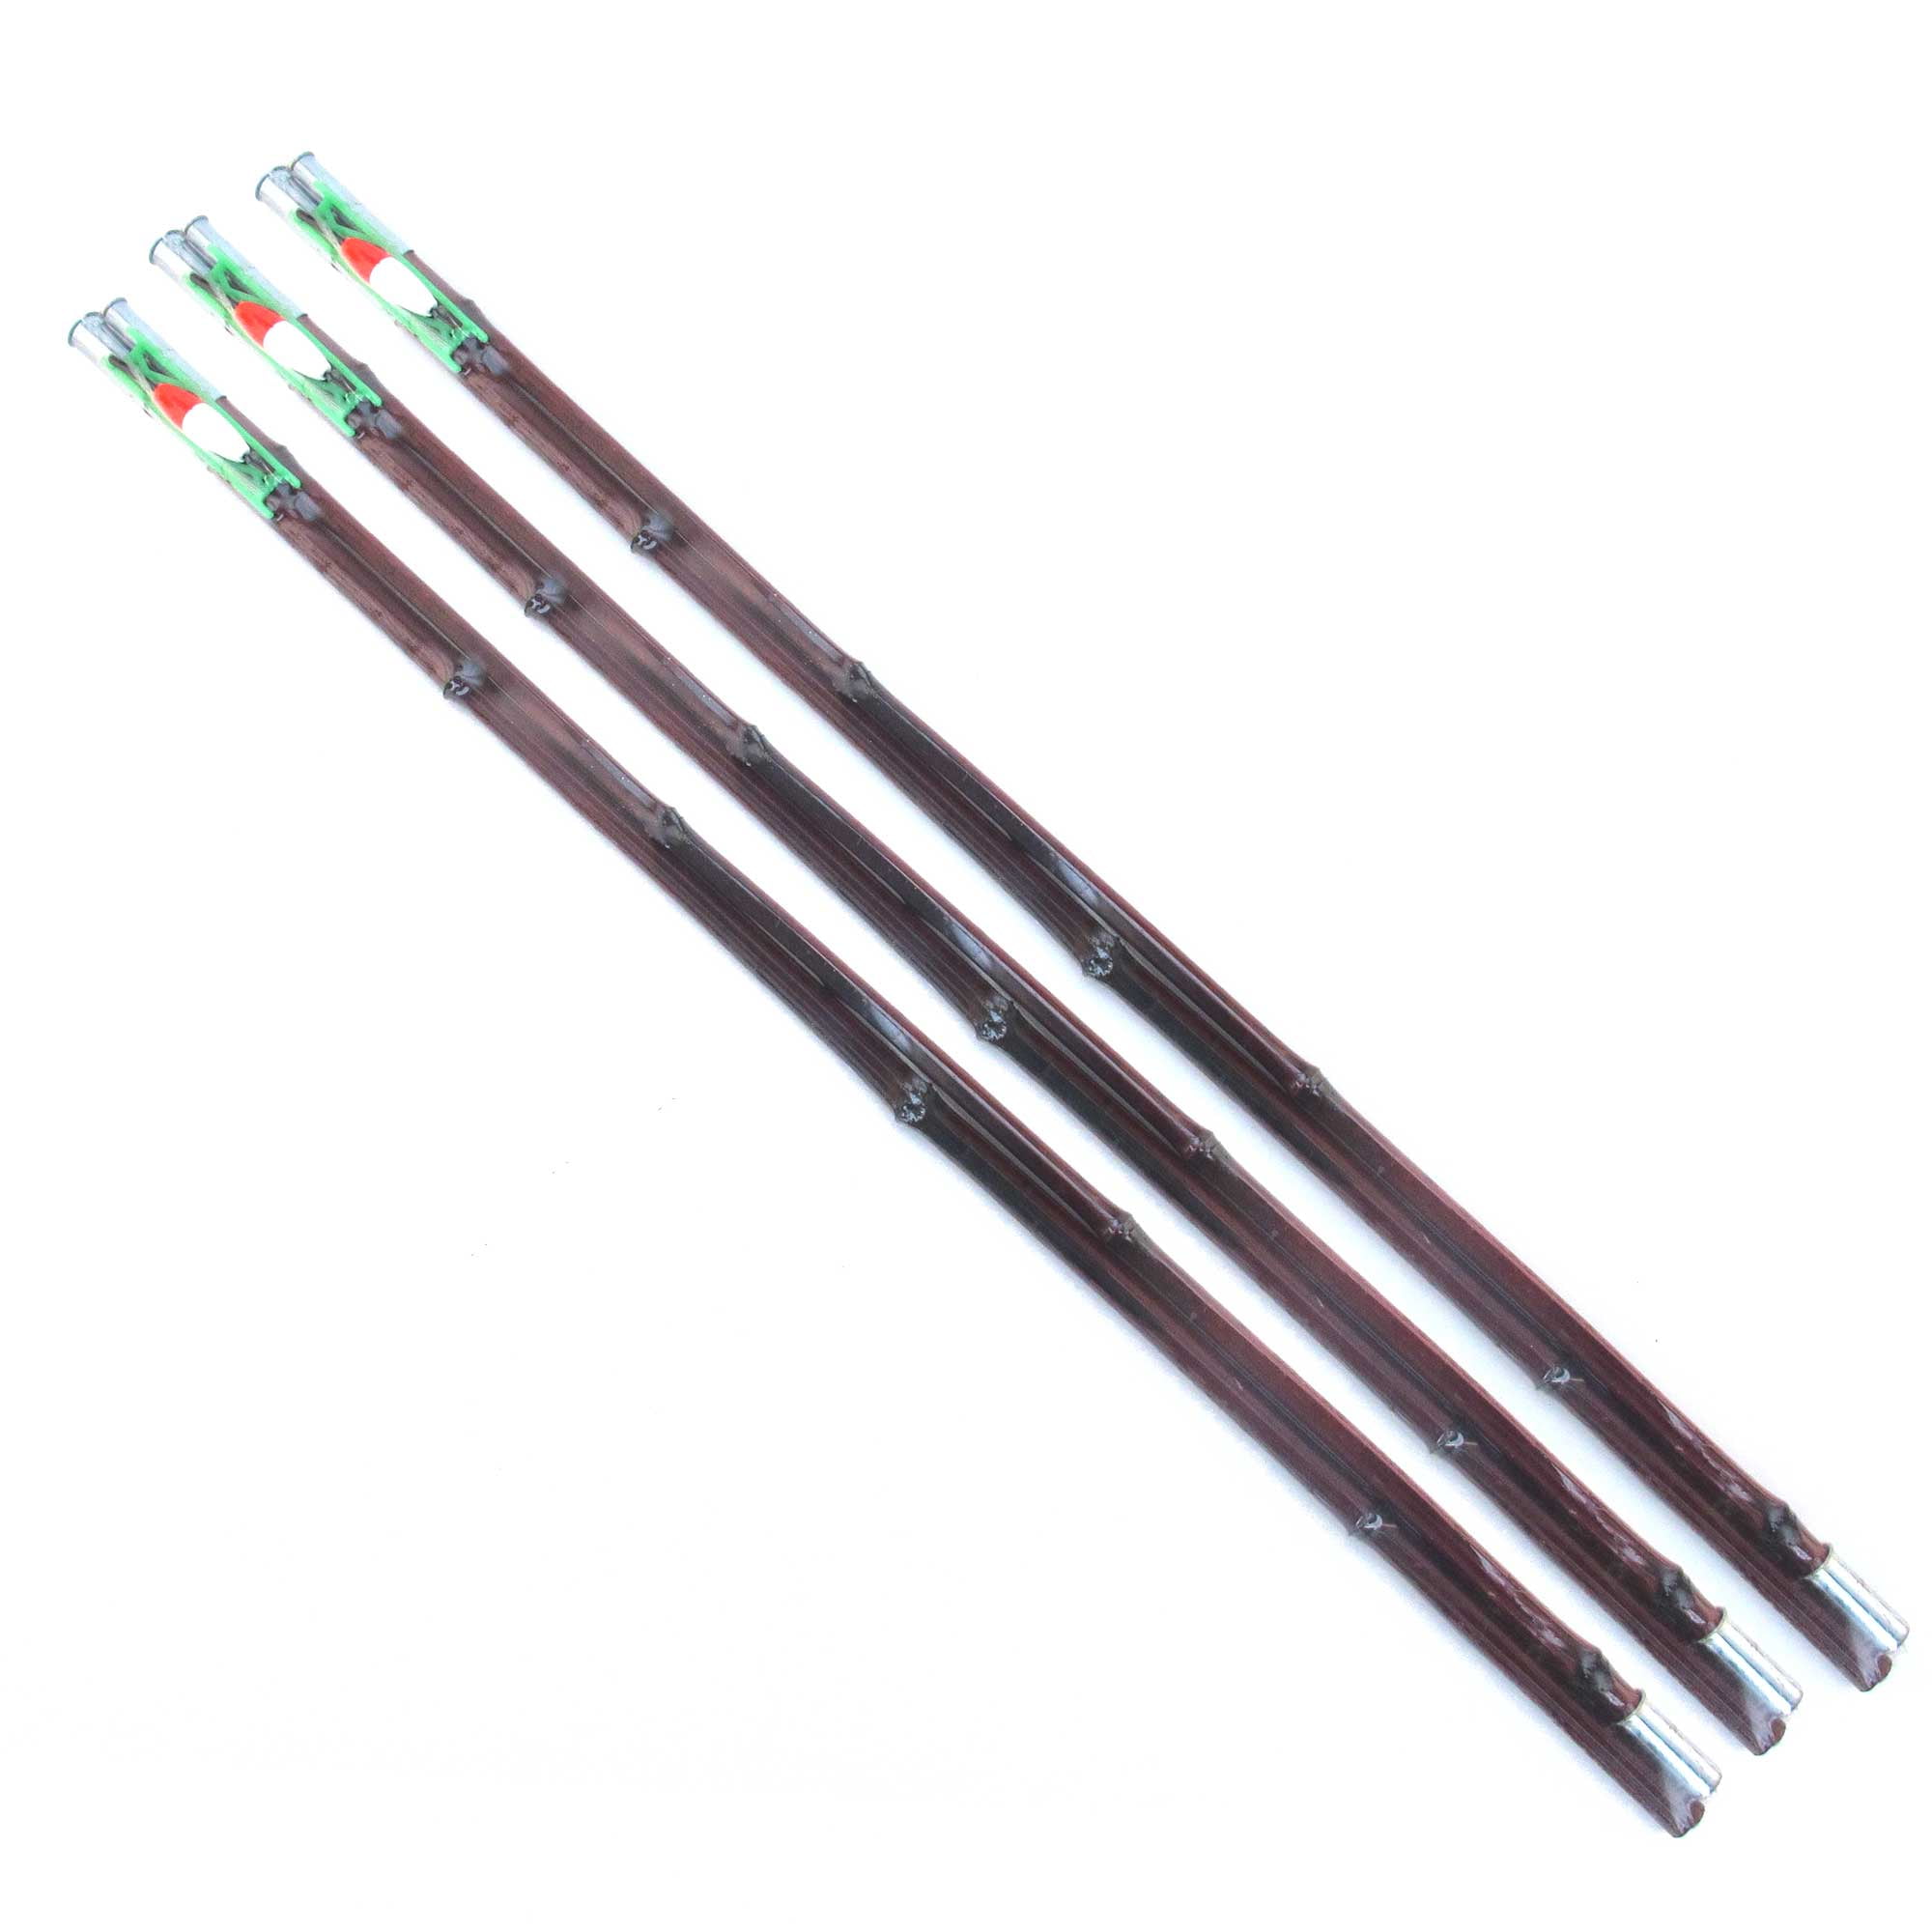 Bamboo Cane Fishing Pole w/ Bobber, Hook, Line, Sinker - 3-piece